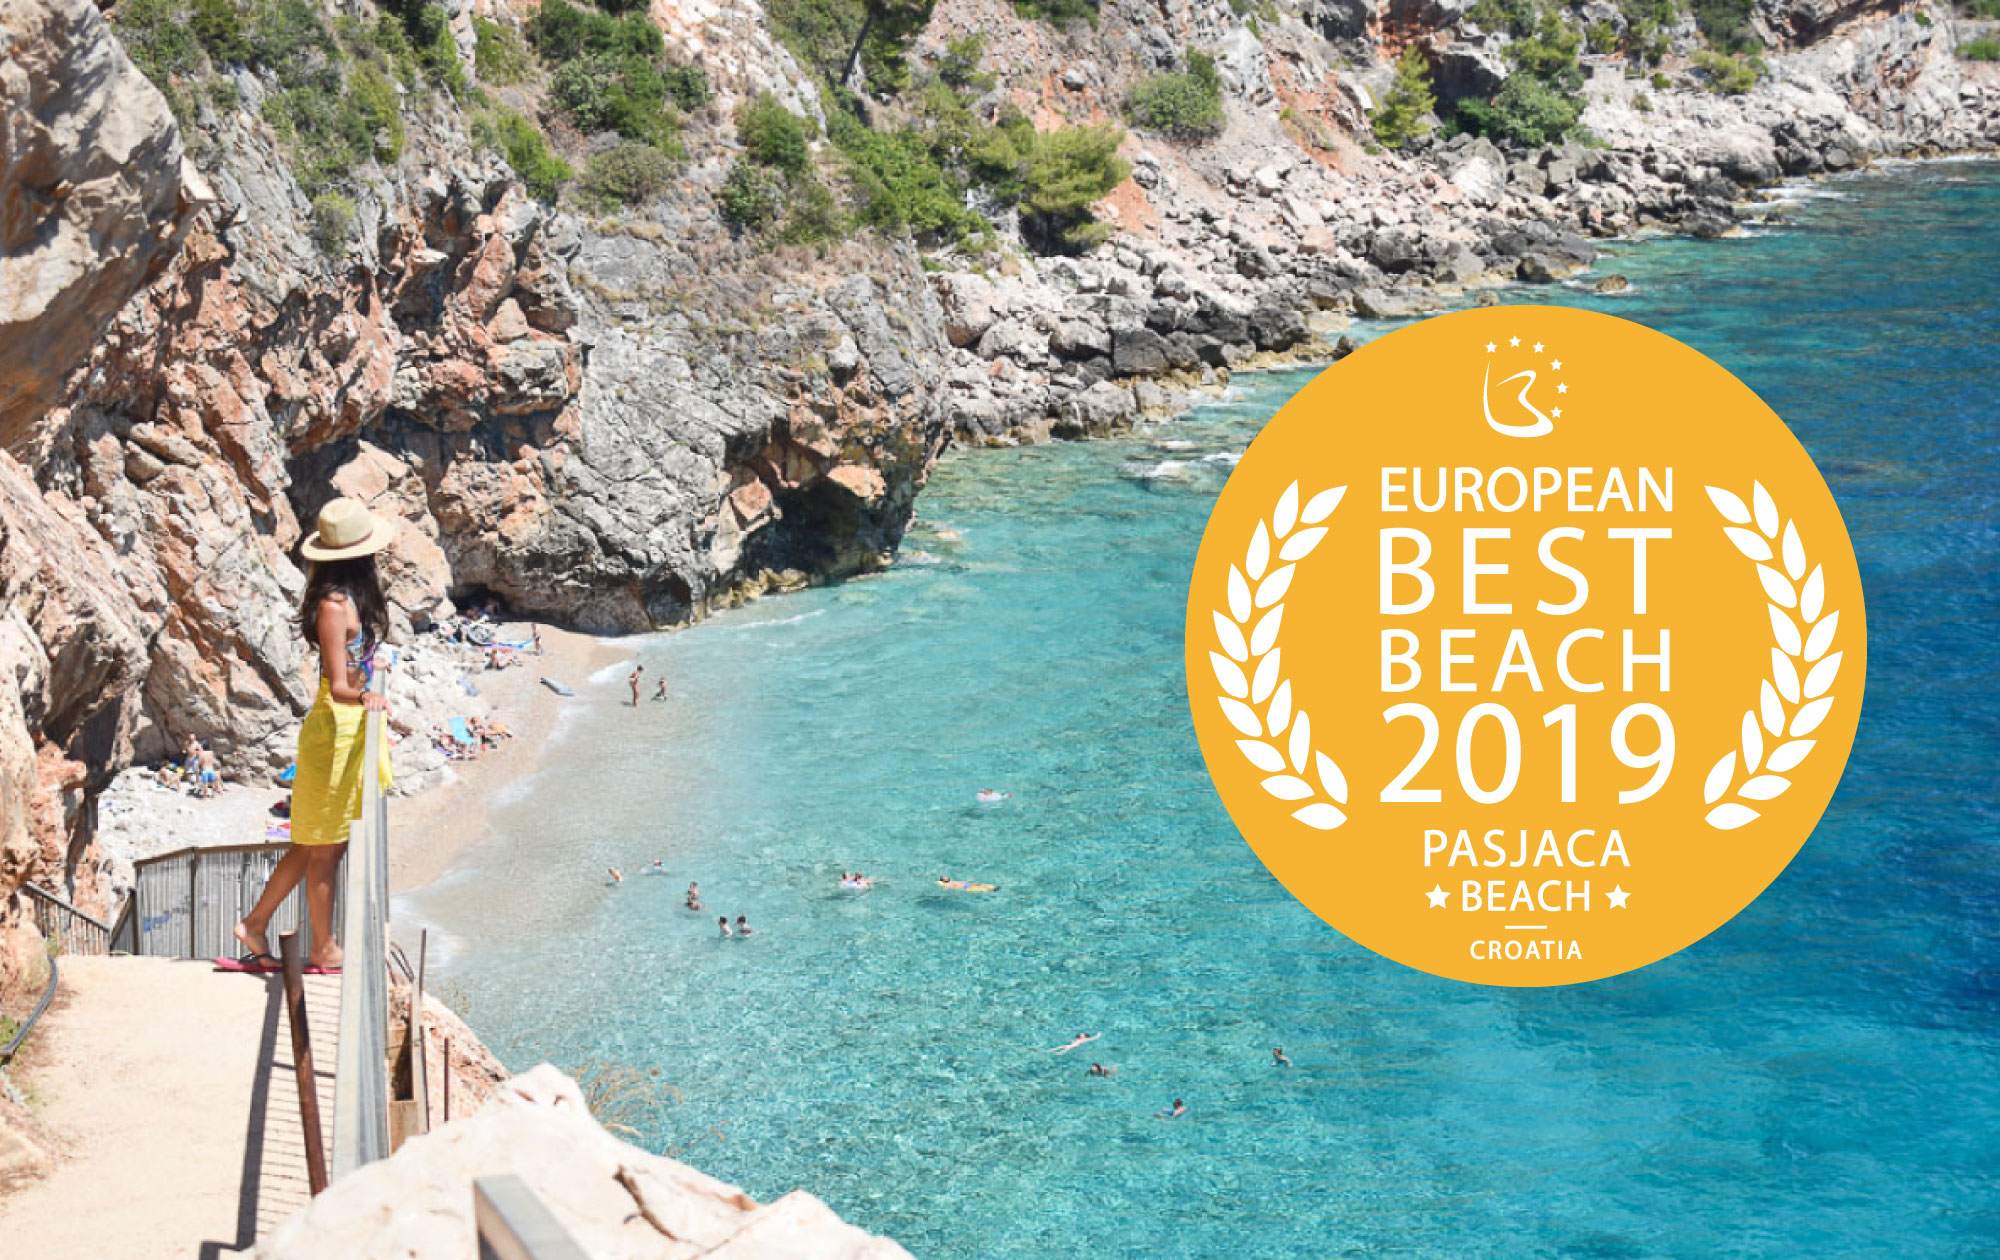 Best beaches in Europe 10 - Europe